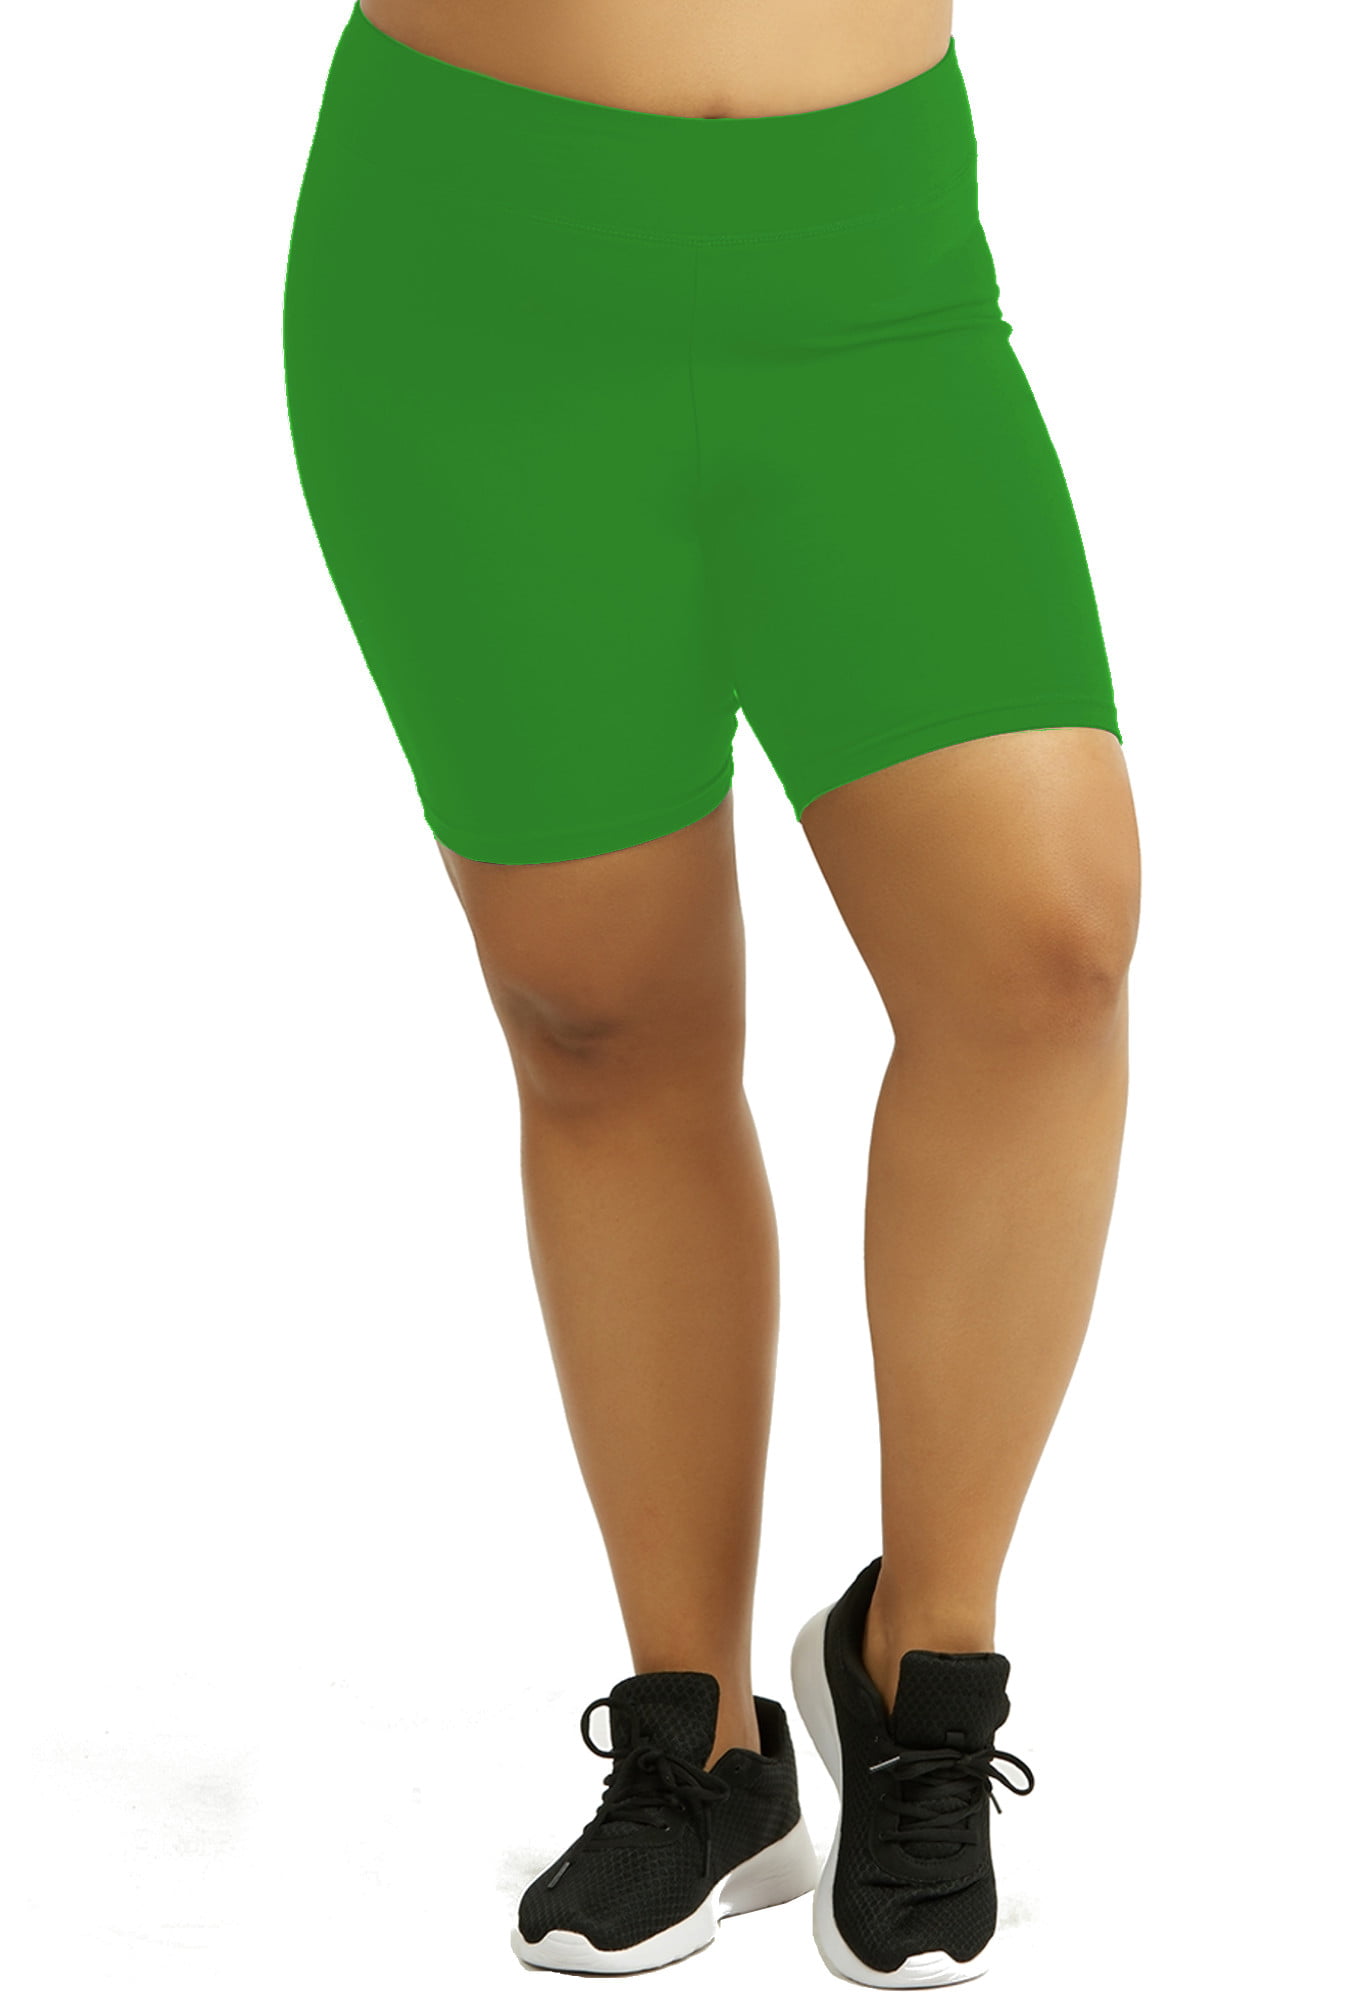 Download Popular - Women's Plus Size Cotton Bike Shorts - Walmart ...